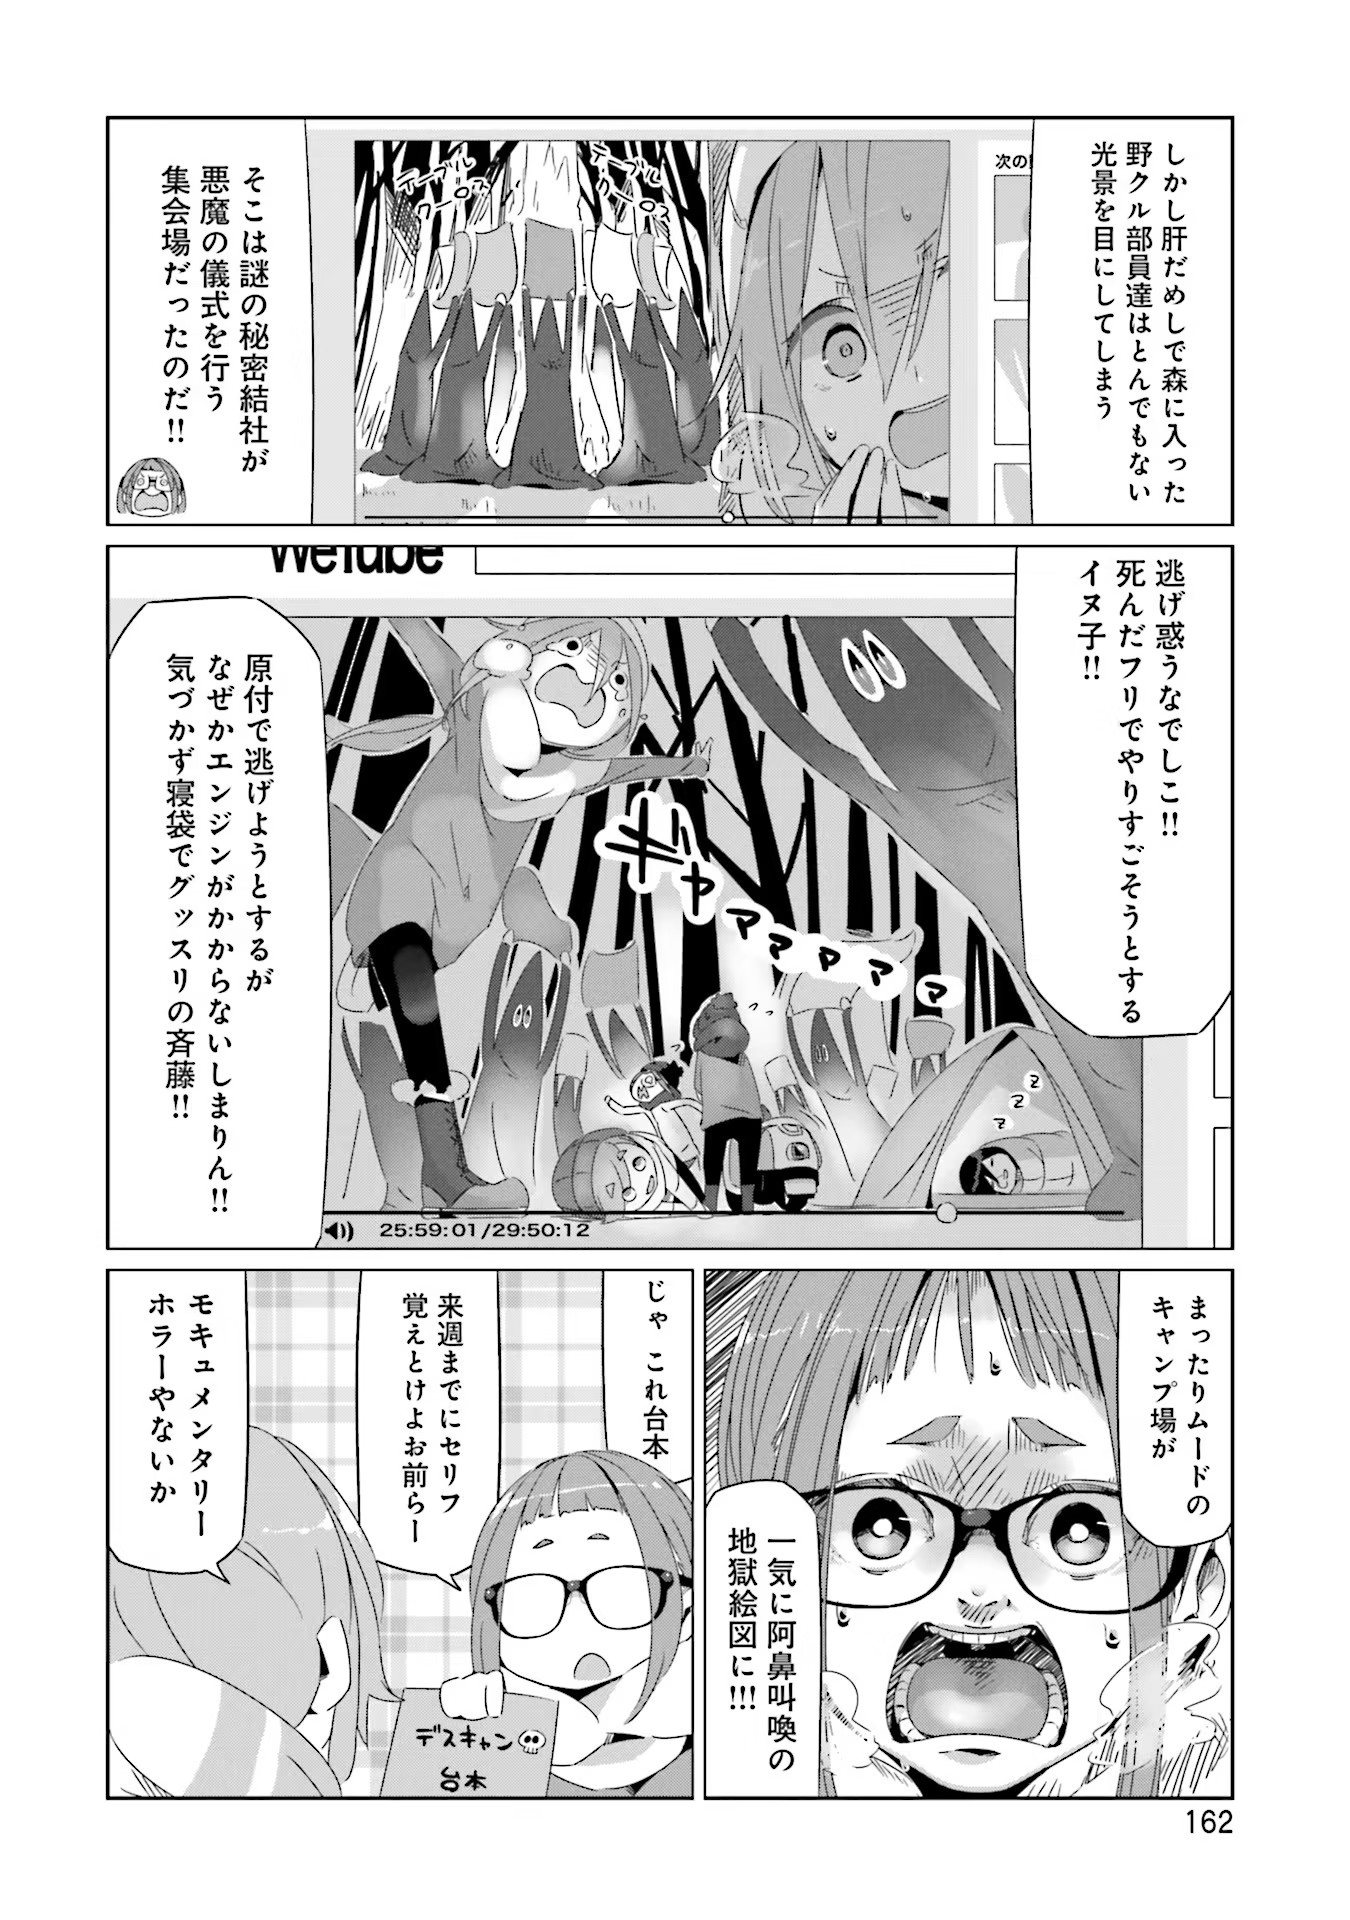 Yuru Camp - Chapter 34.5 - Page 4